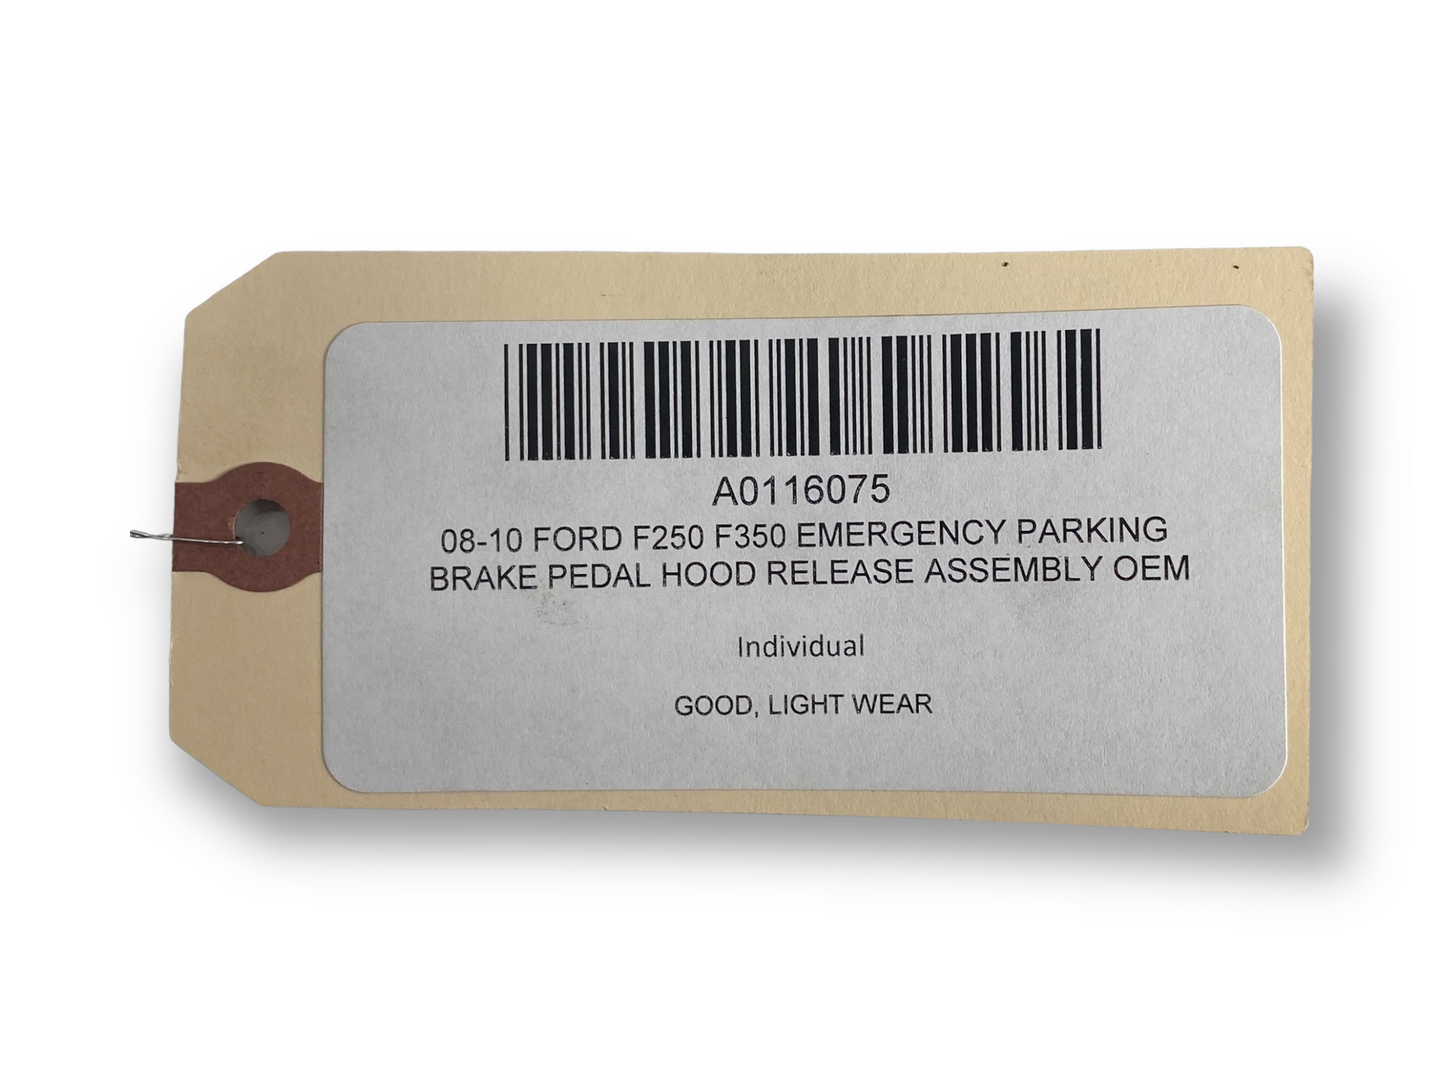 08-10 Ford F250 F350 Emergency Parking Brake Pedal Hood Release Assembly OEM